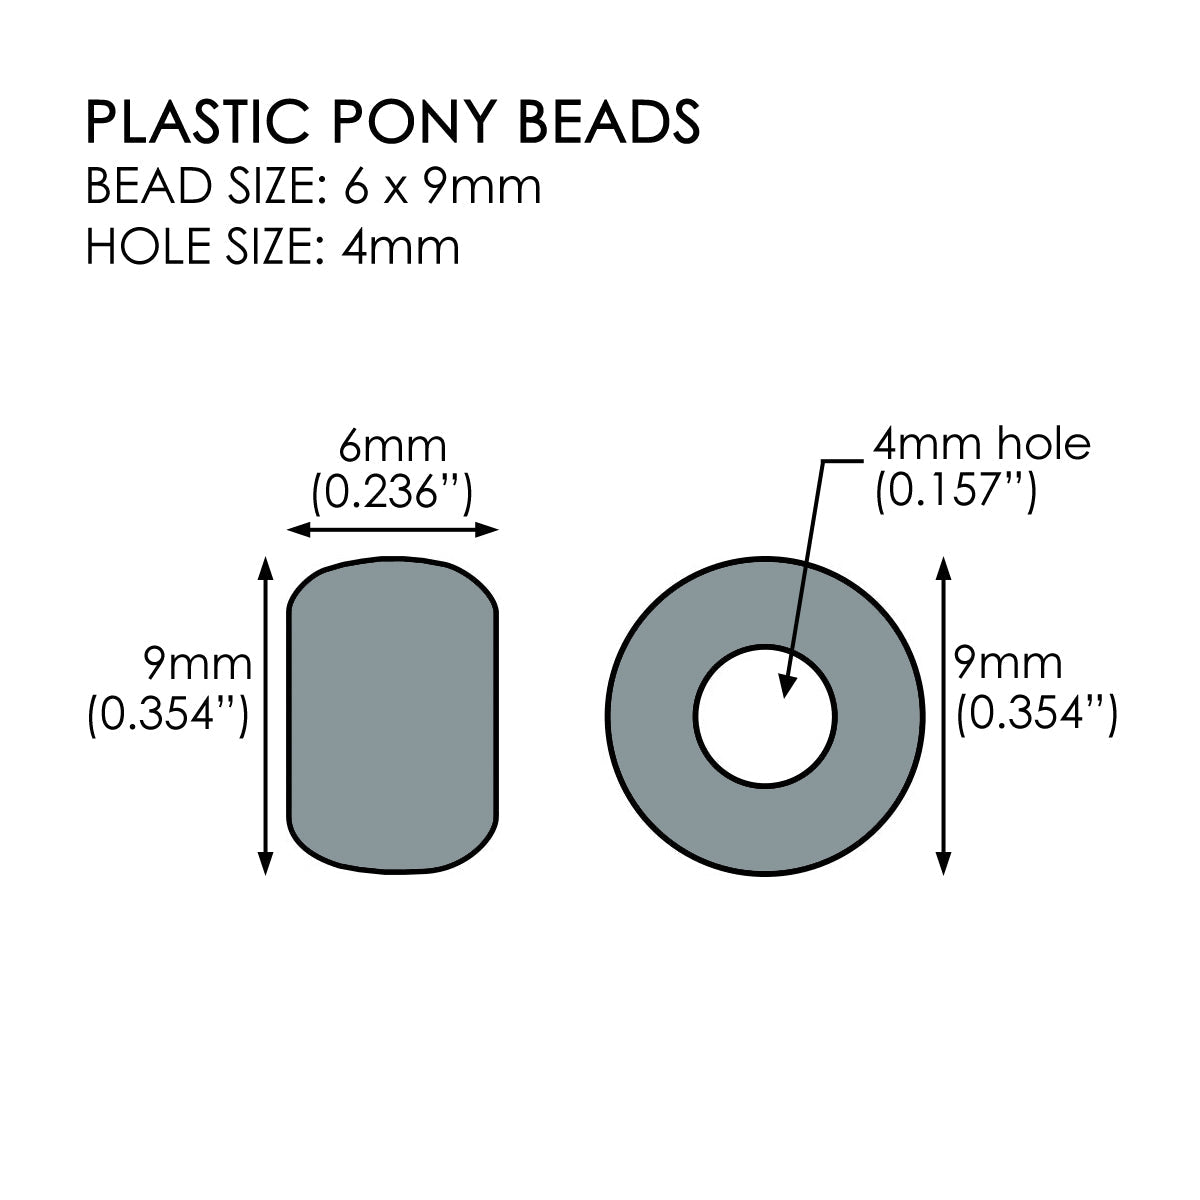 Clear Plastic Craft Pony Beads 6x9mm, 500 beads Bulk Pack - Pony